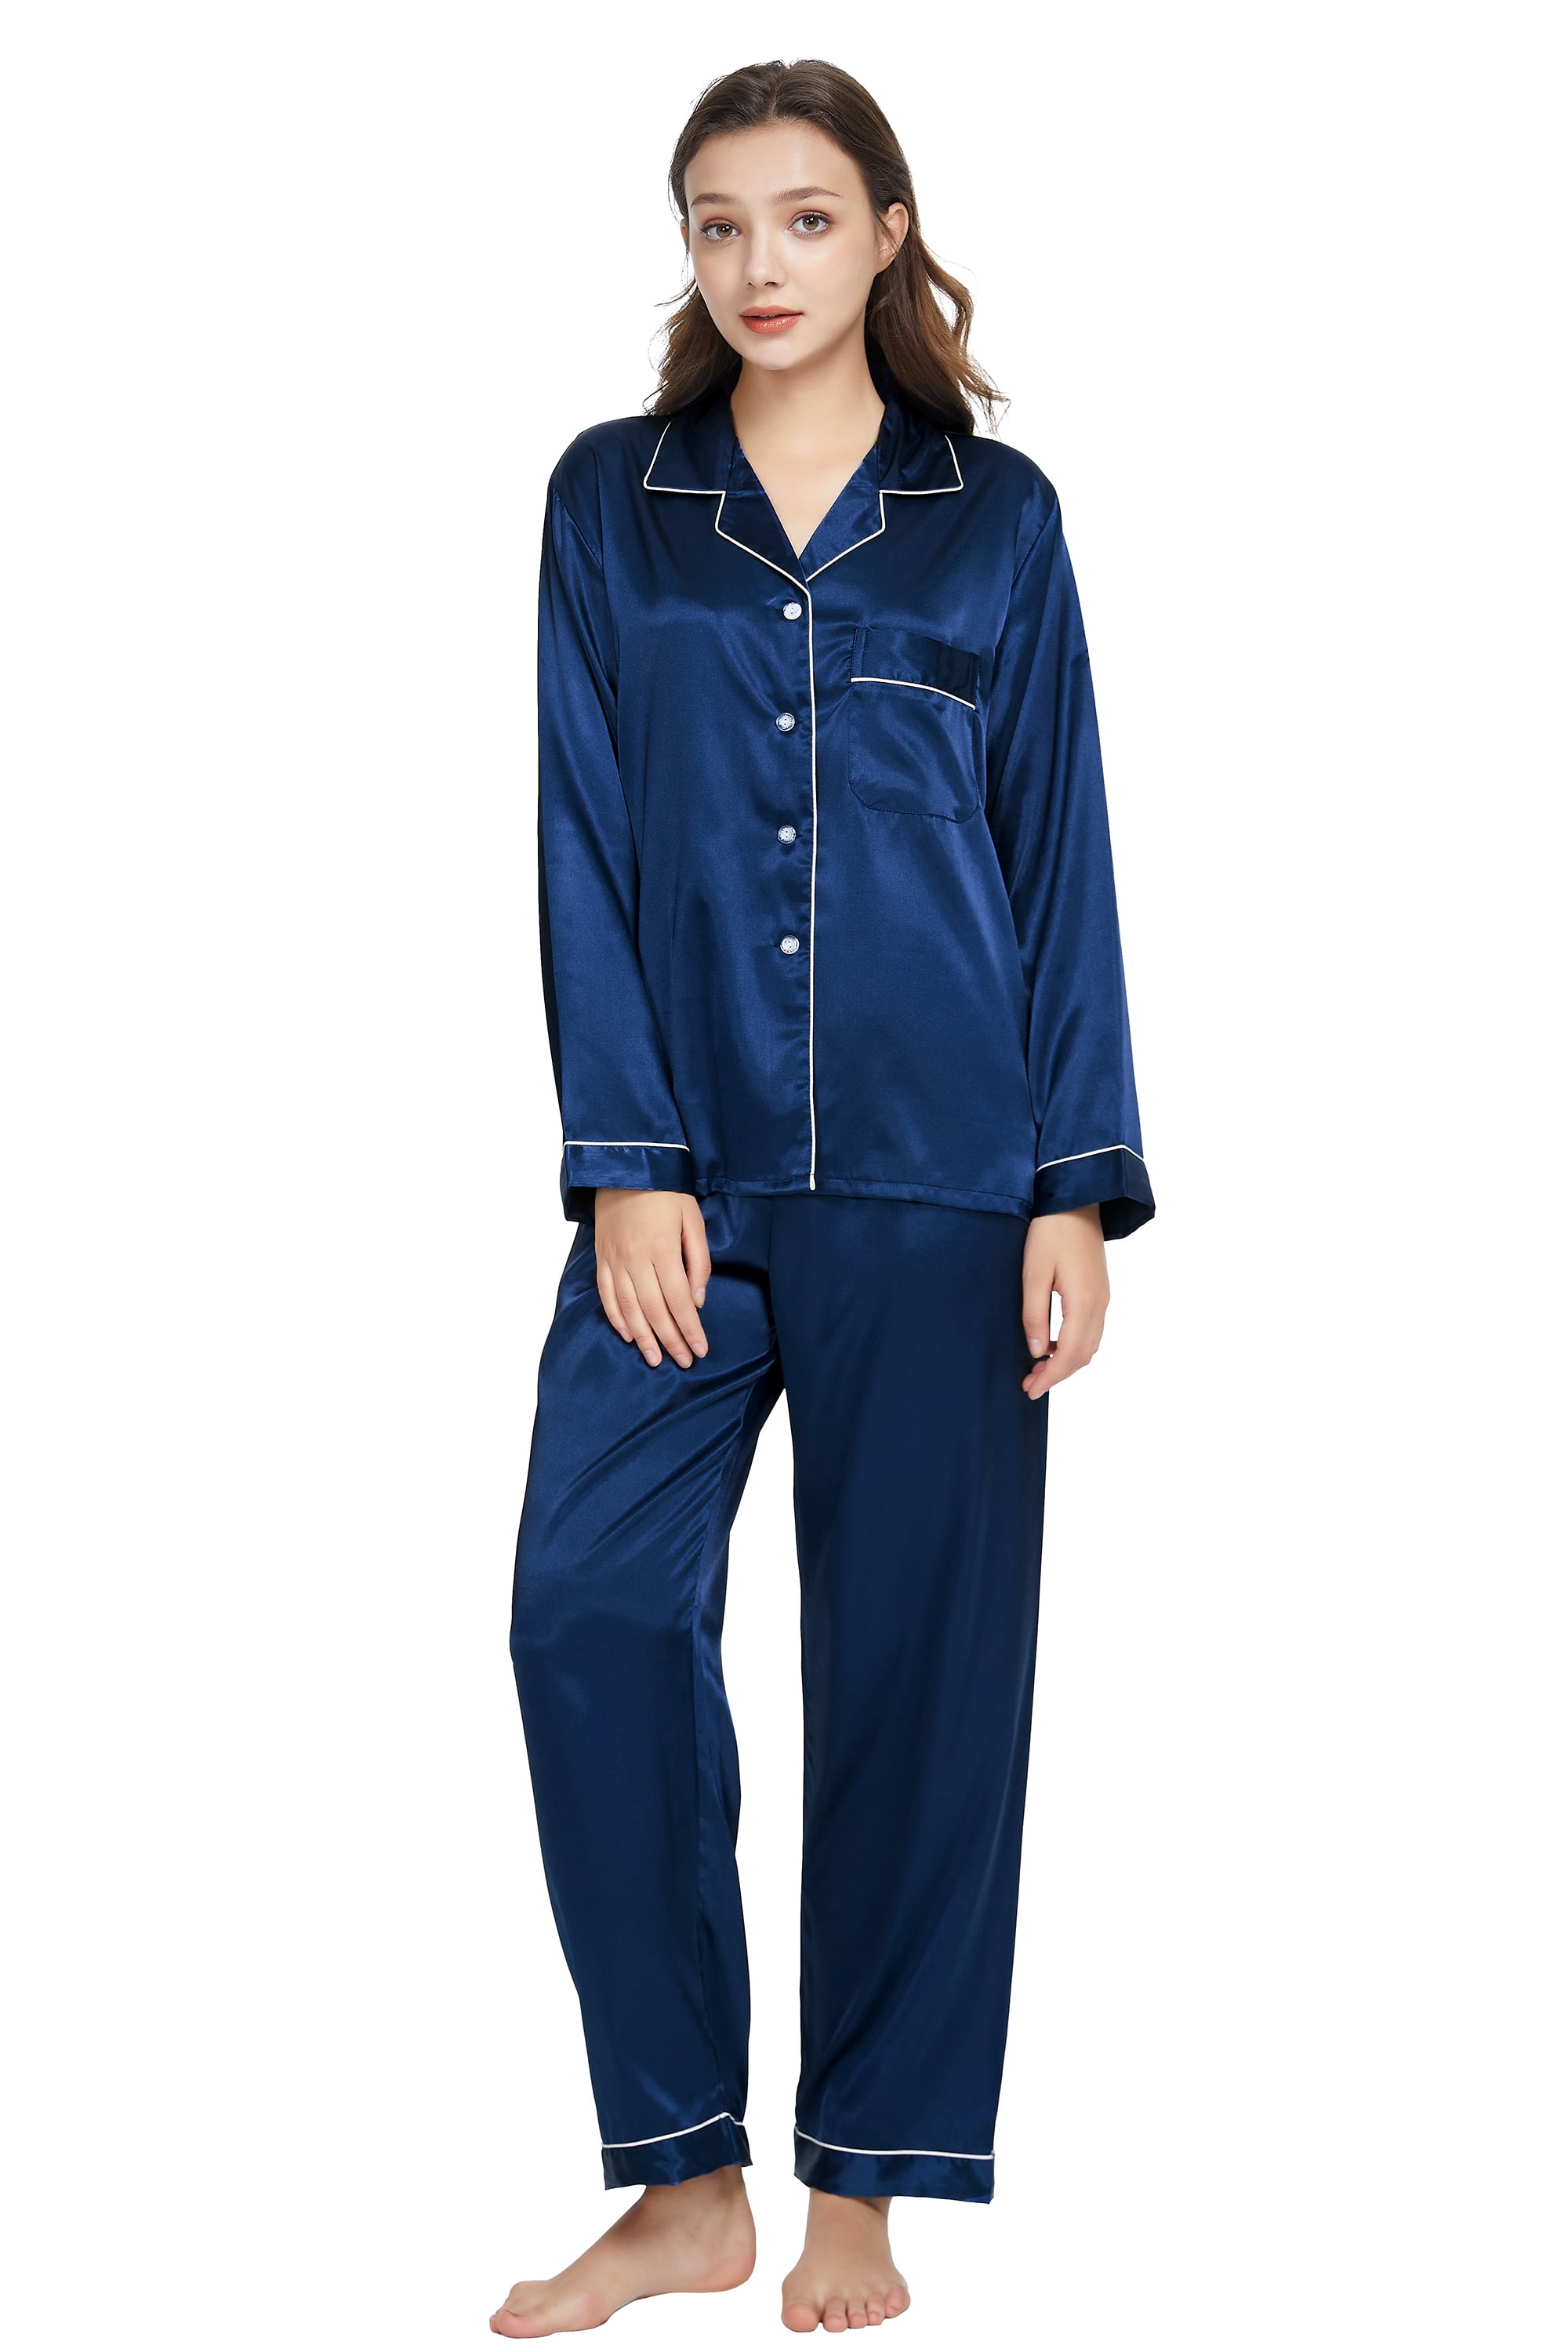 Women’s Blue Romance Silk Pajama Set with Piping, M